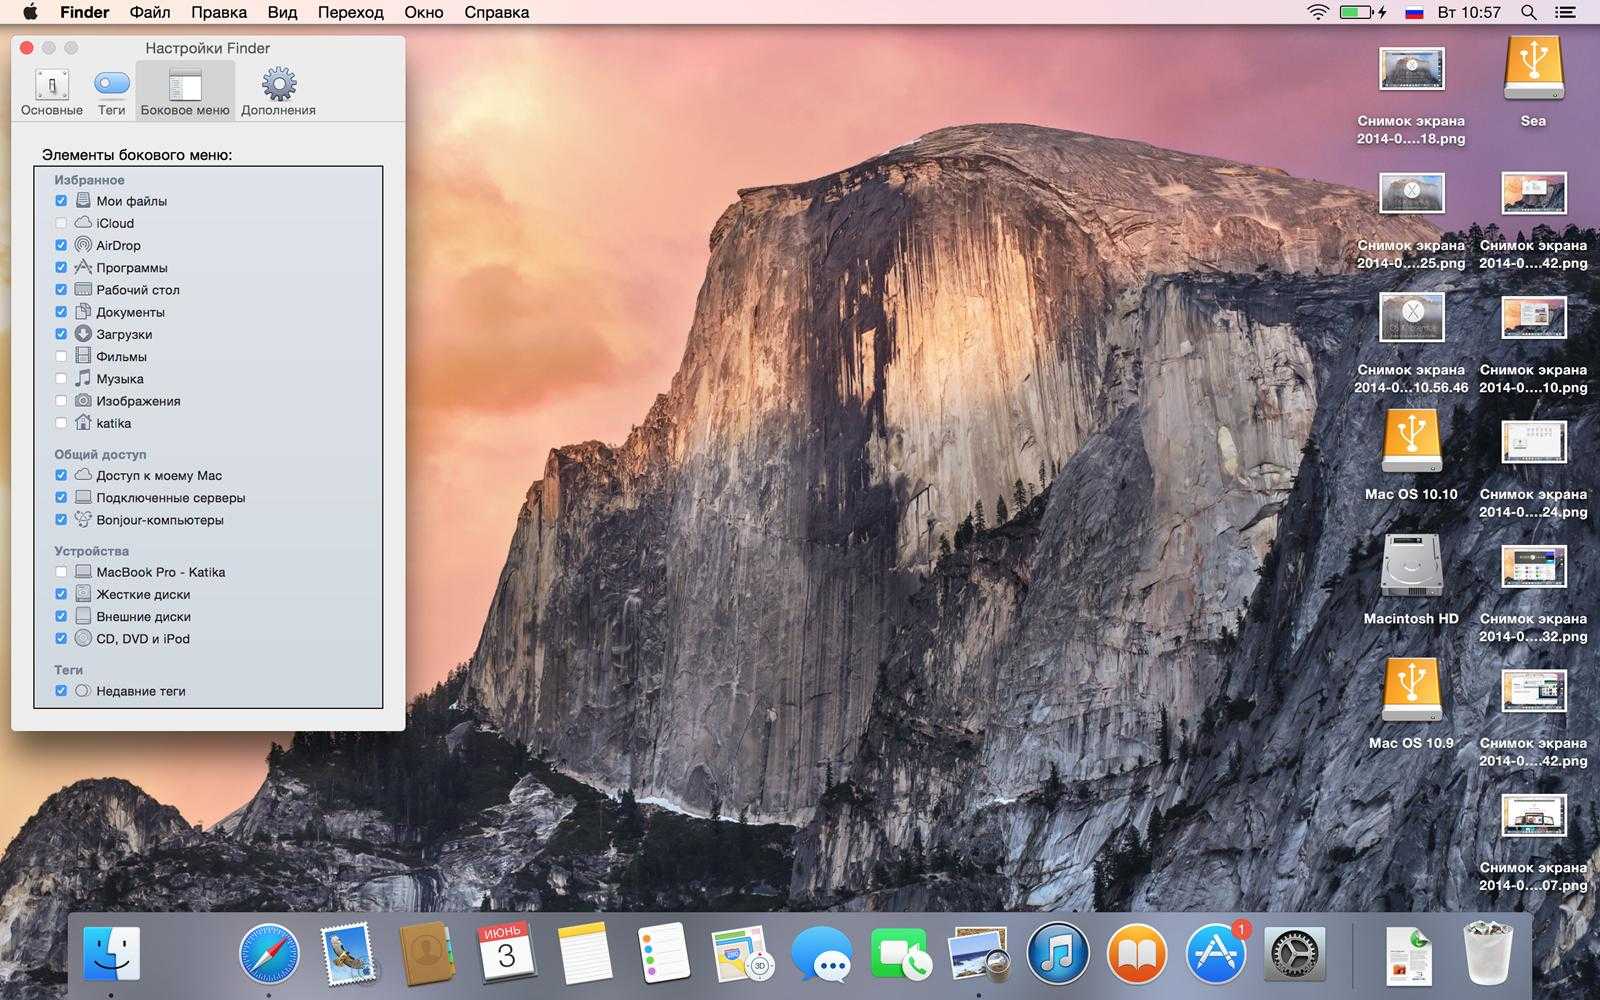 Mac os на старый mac. Os x 10.10 Yosemite. Мак ОС Йосемити. Операционная система Mac os x 10. Mac os x 10.10 Yosemite (2014-2015).